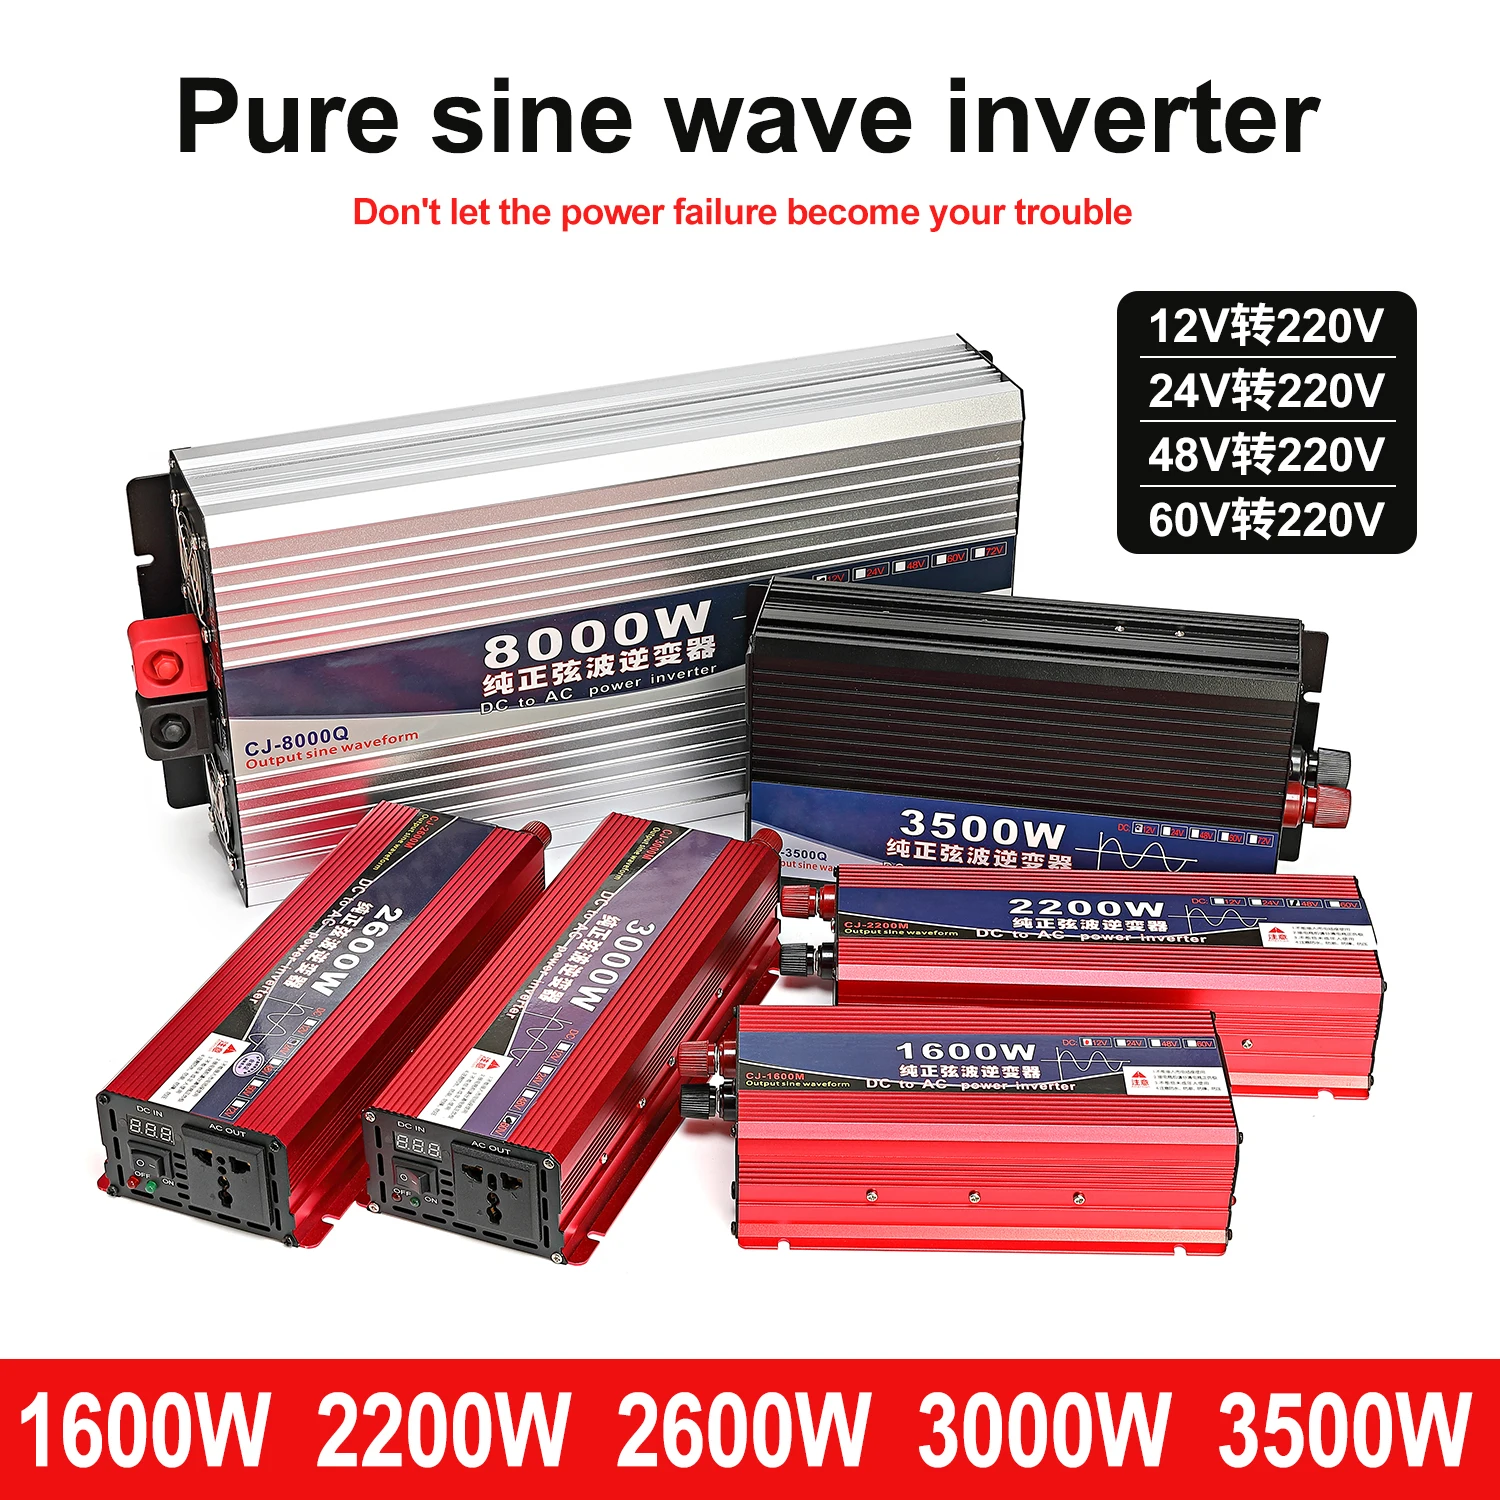 

3000W Pure sine wave inverter 12v24v48v72V to 220V vehicle mounted household high power 2200W battery converter SUSWE 60HZ/50hz